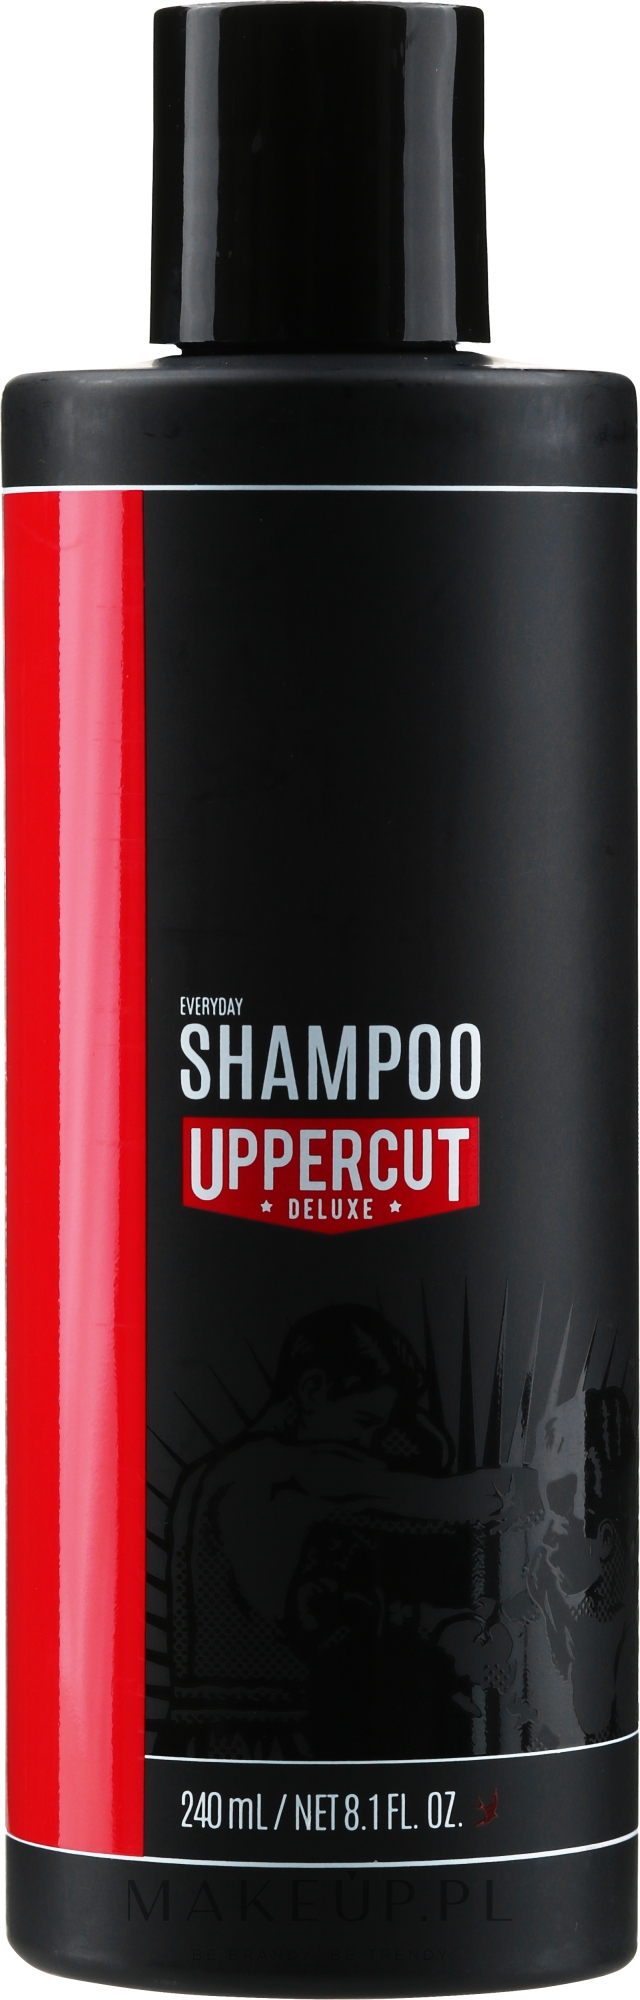 szampon uppercut opinie